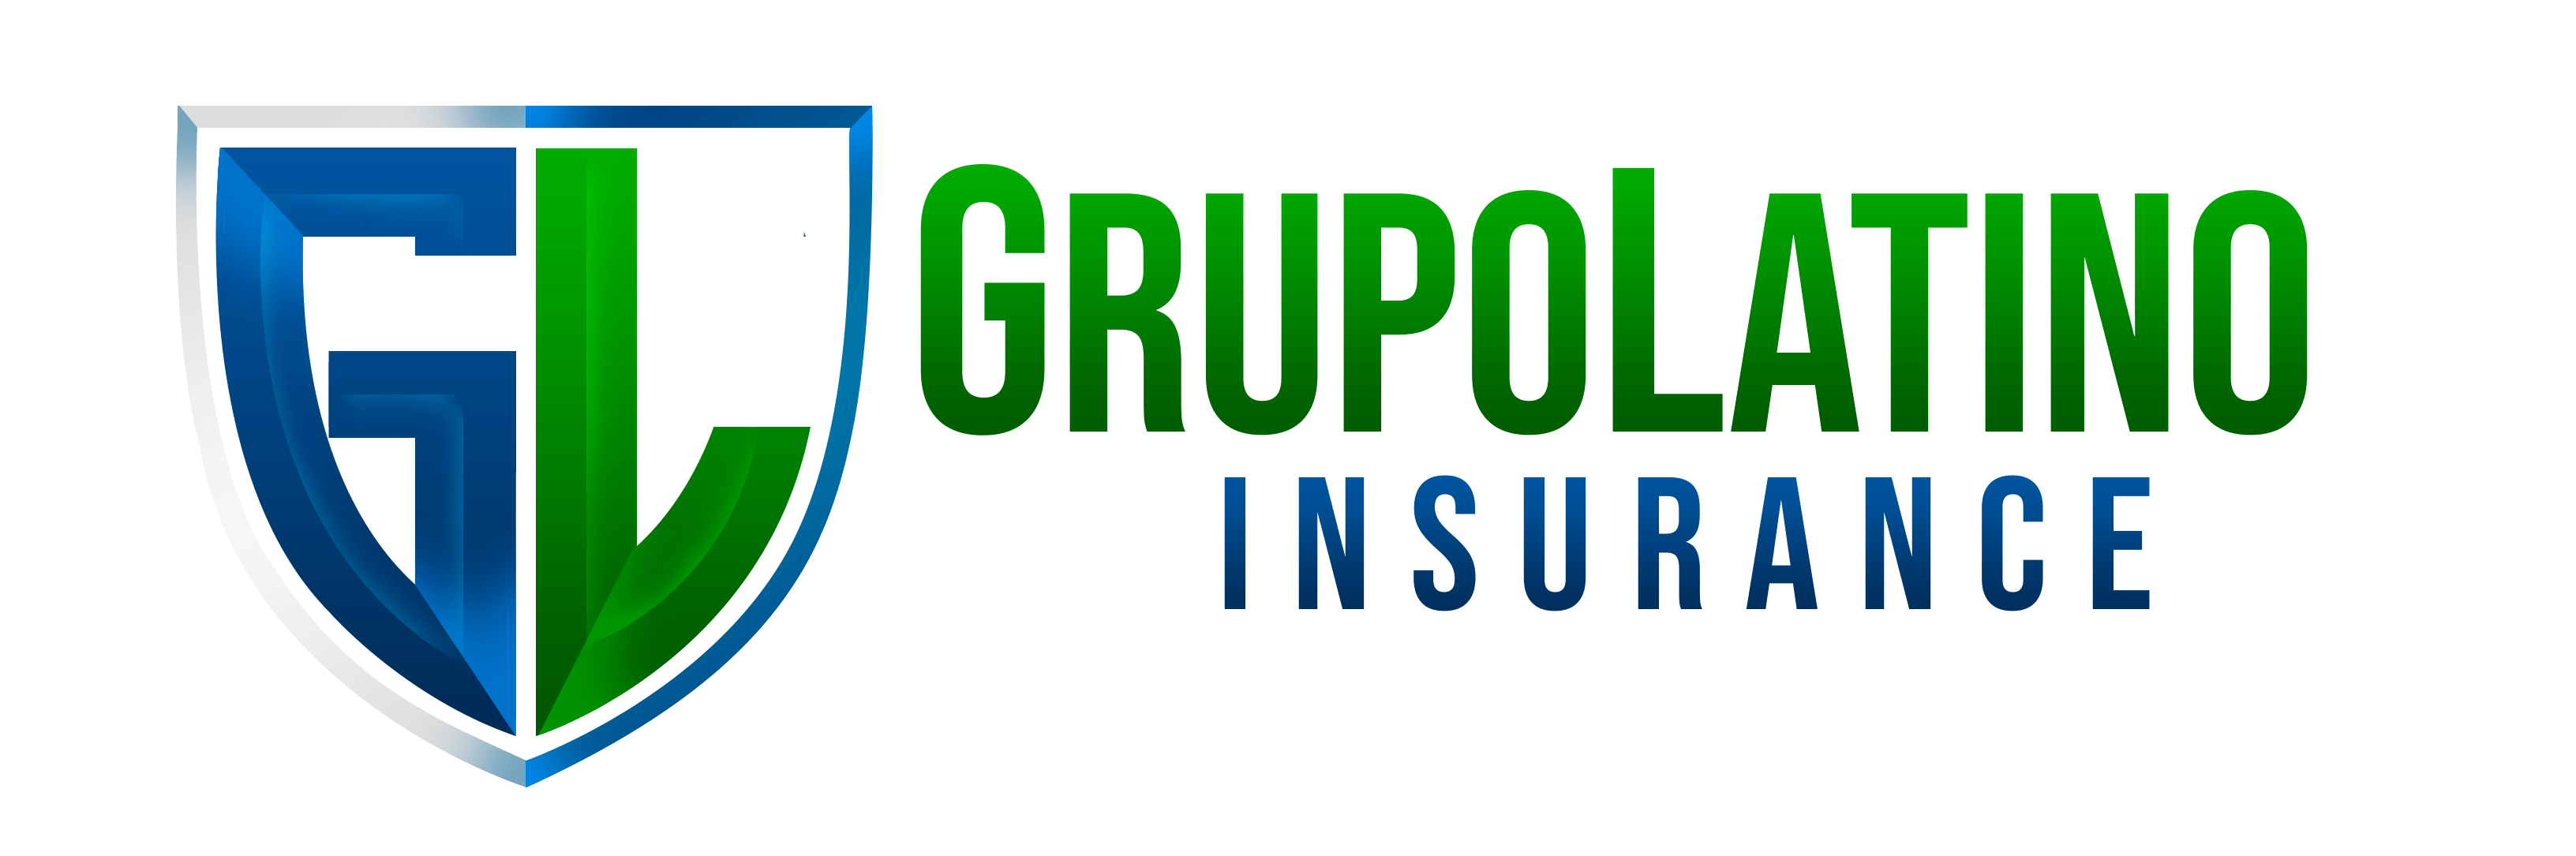 Grupo Latino Insurance